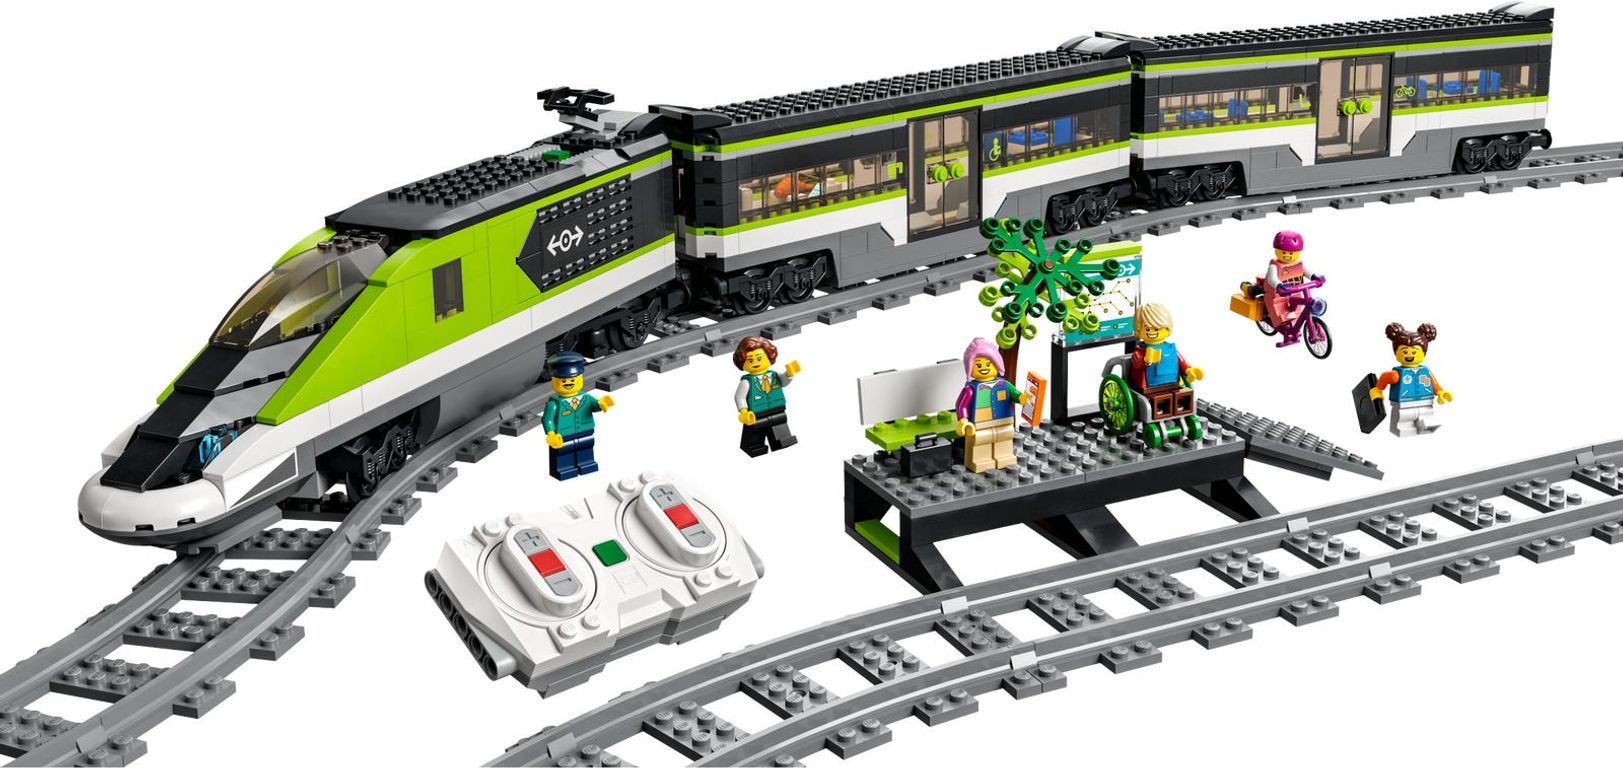 LEGO® City Express Passenger Train components